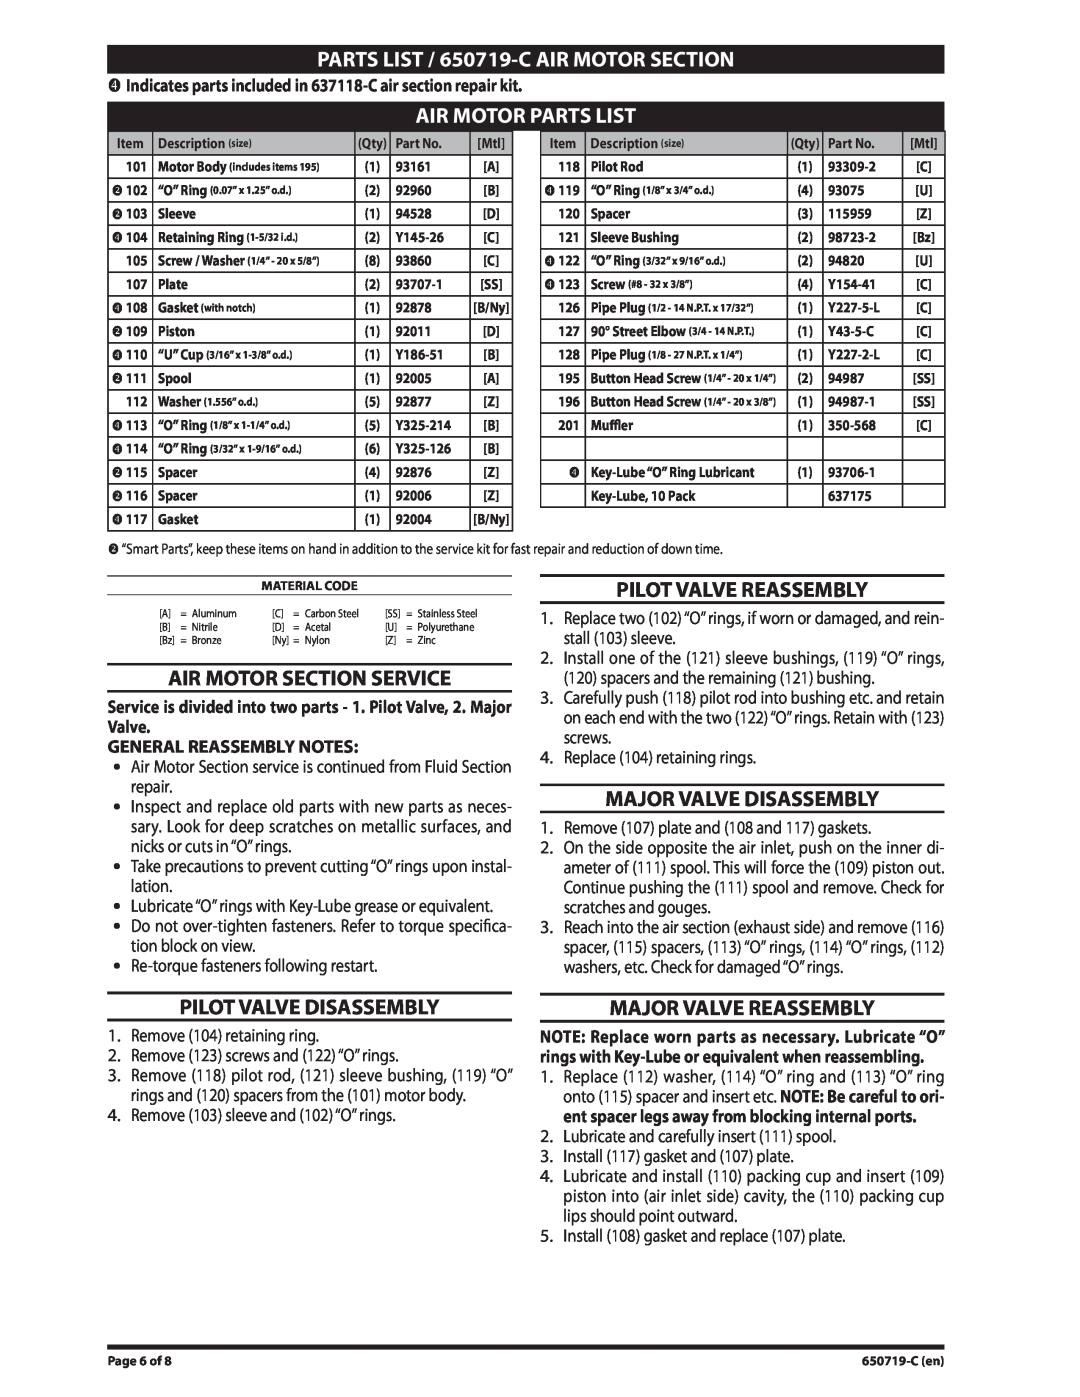 Ingersoll-Rand manual PARTS LIST / 650719-CAIR MOTOR SECTION, Air Motor Parts List, Air Motor Section Service 